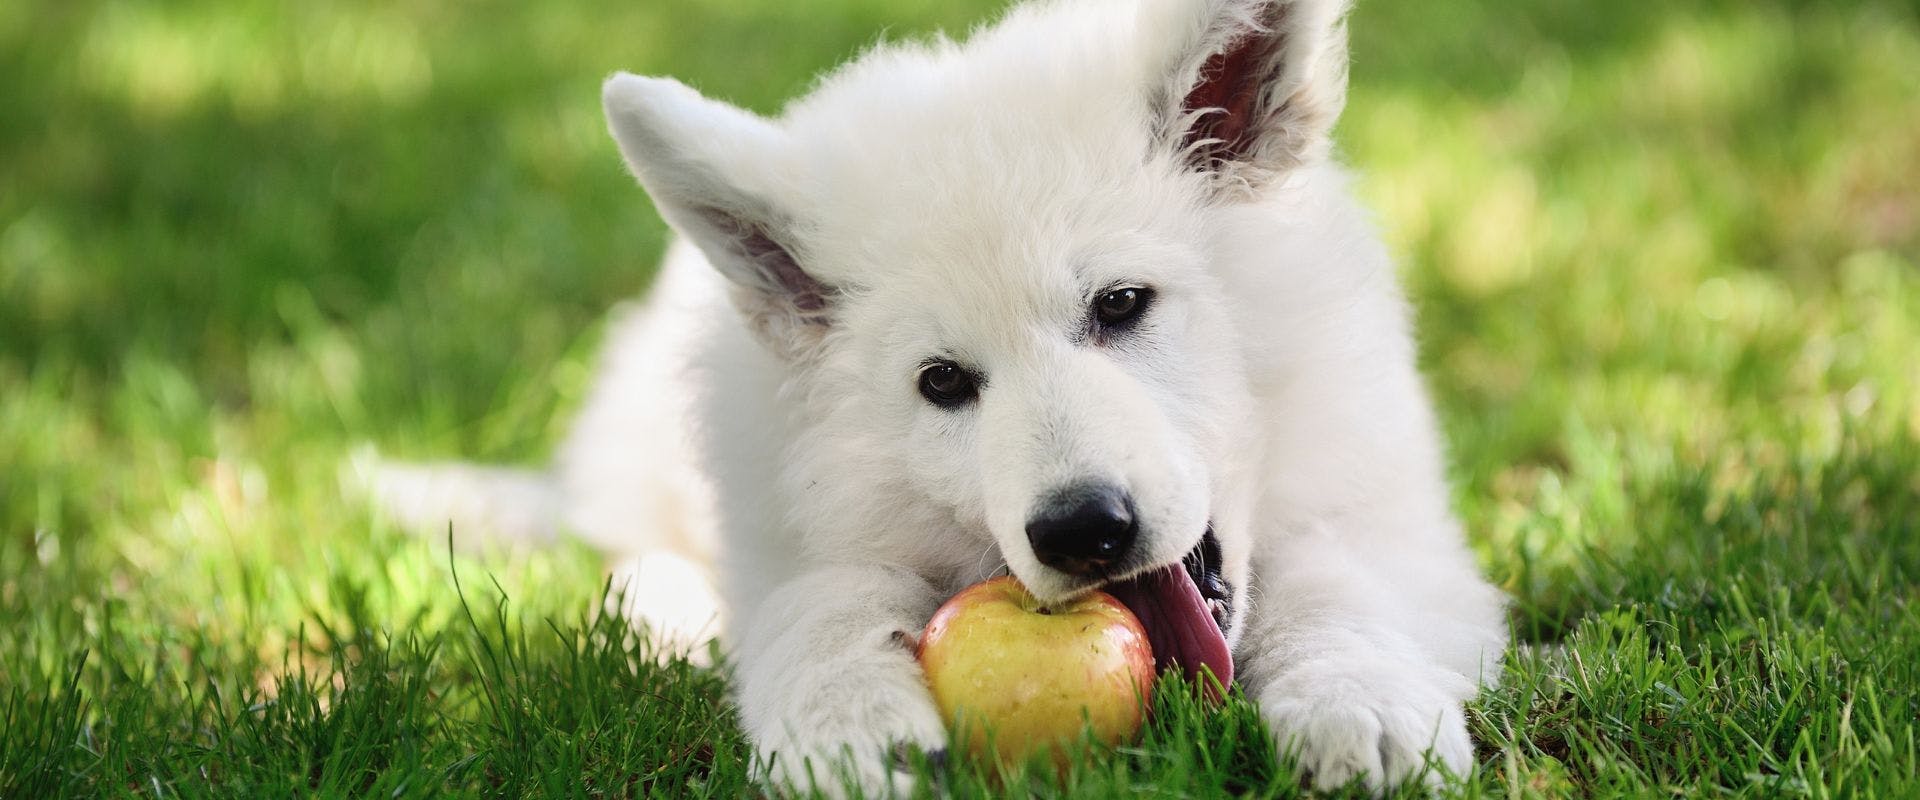 white dog eating an apple